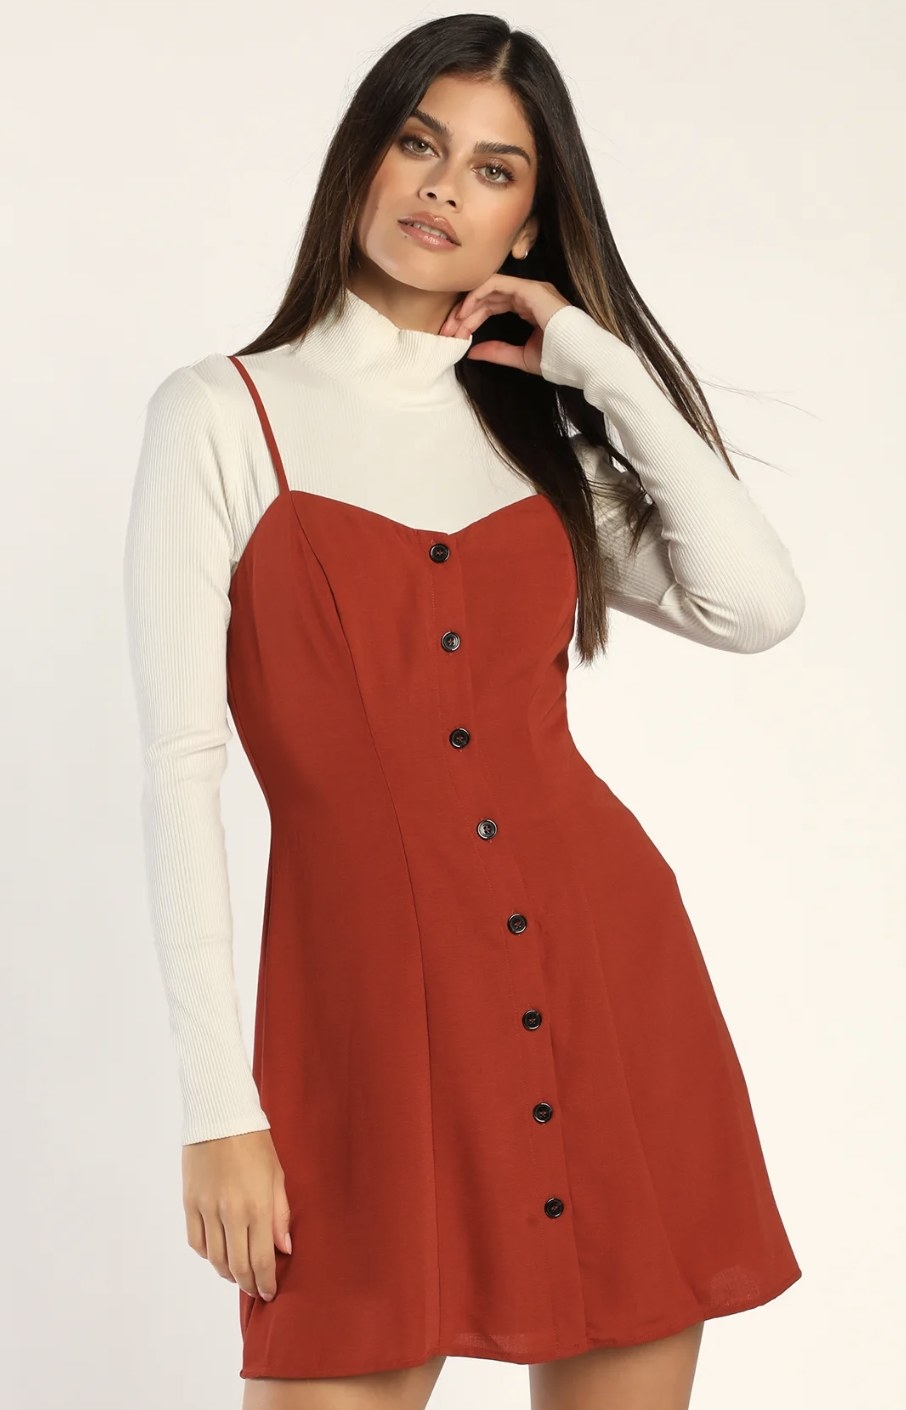 A rust red button up mini dress